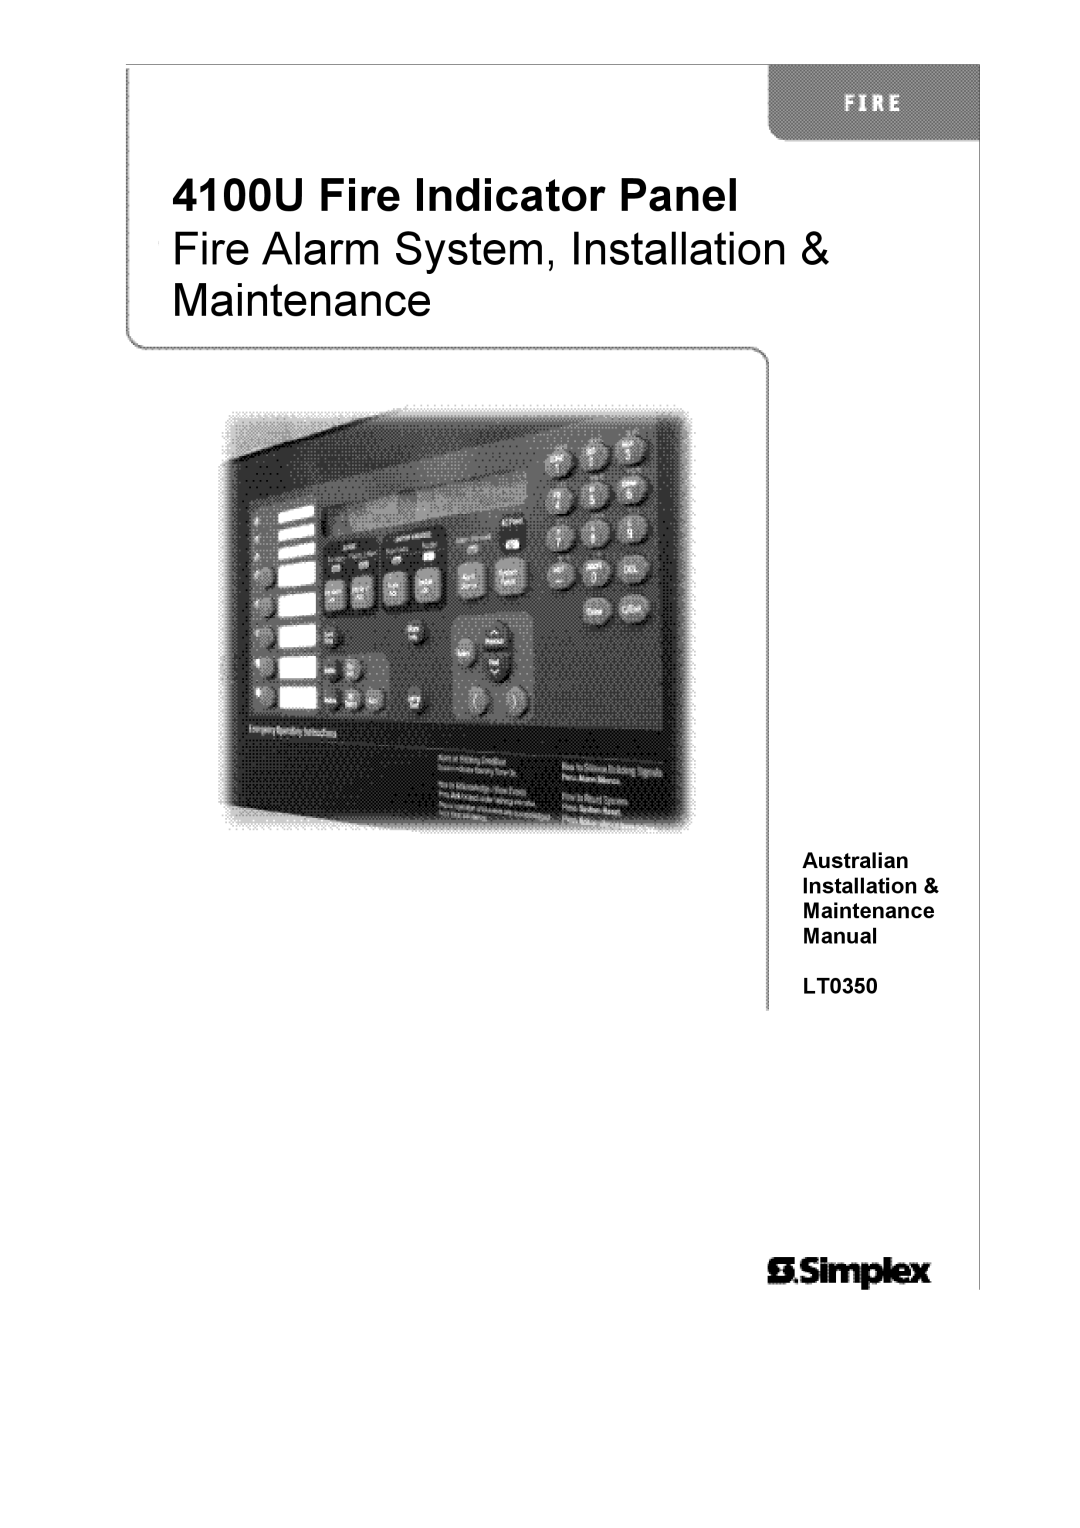 Tyco installation manual 4100U Fire Indicator Panel, Fire Alarm System, Installation & Maintenance, Australian, Manual 